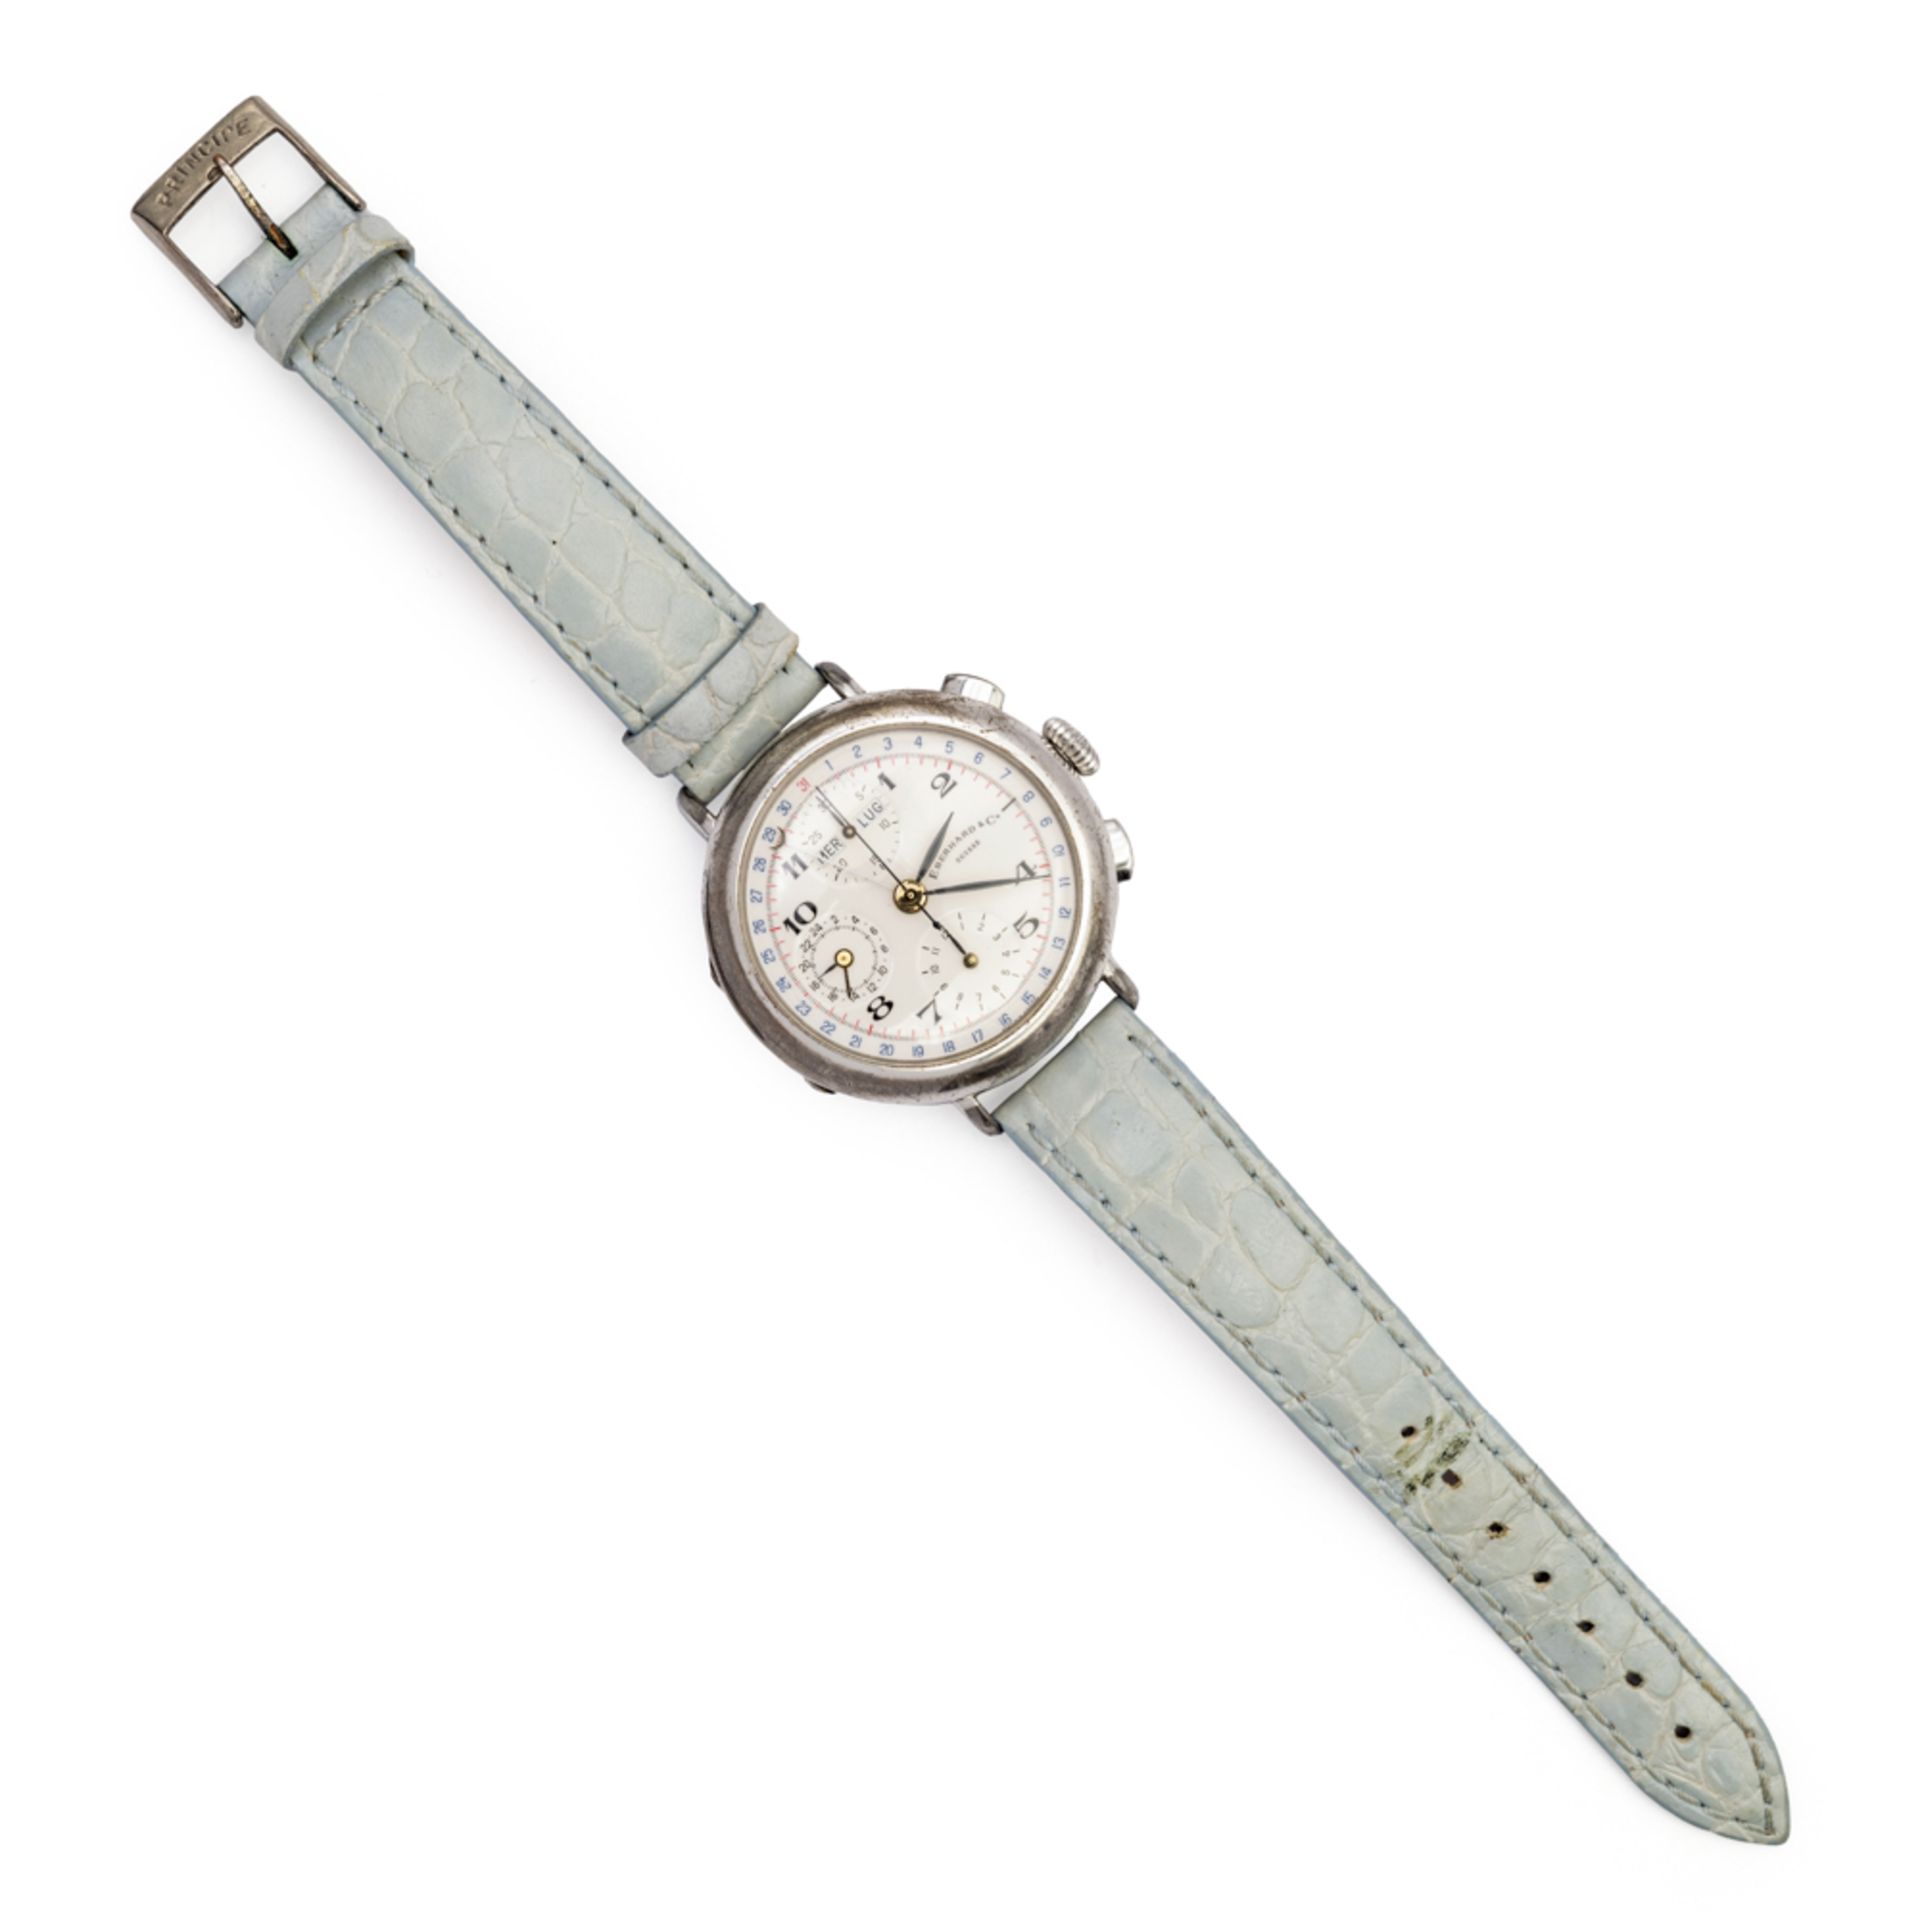 Eberhard & Co. Chronograph "Replica" wristwatch - Image 2 of 2